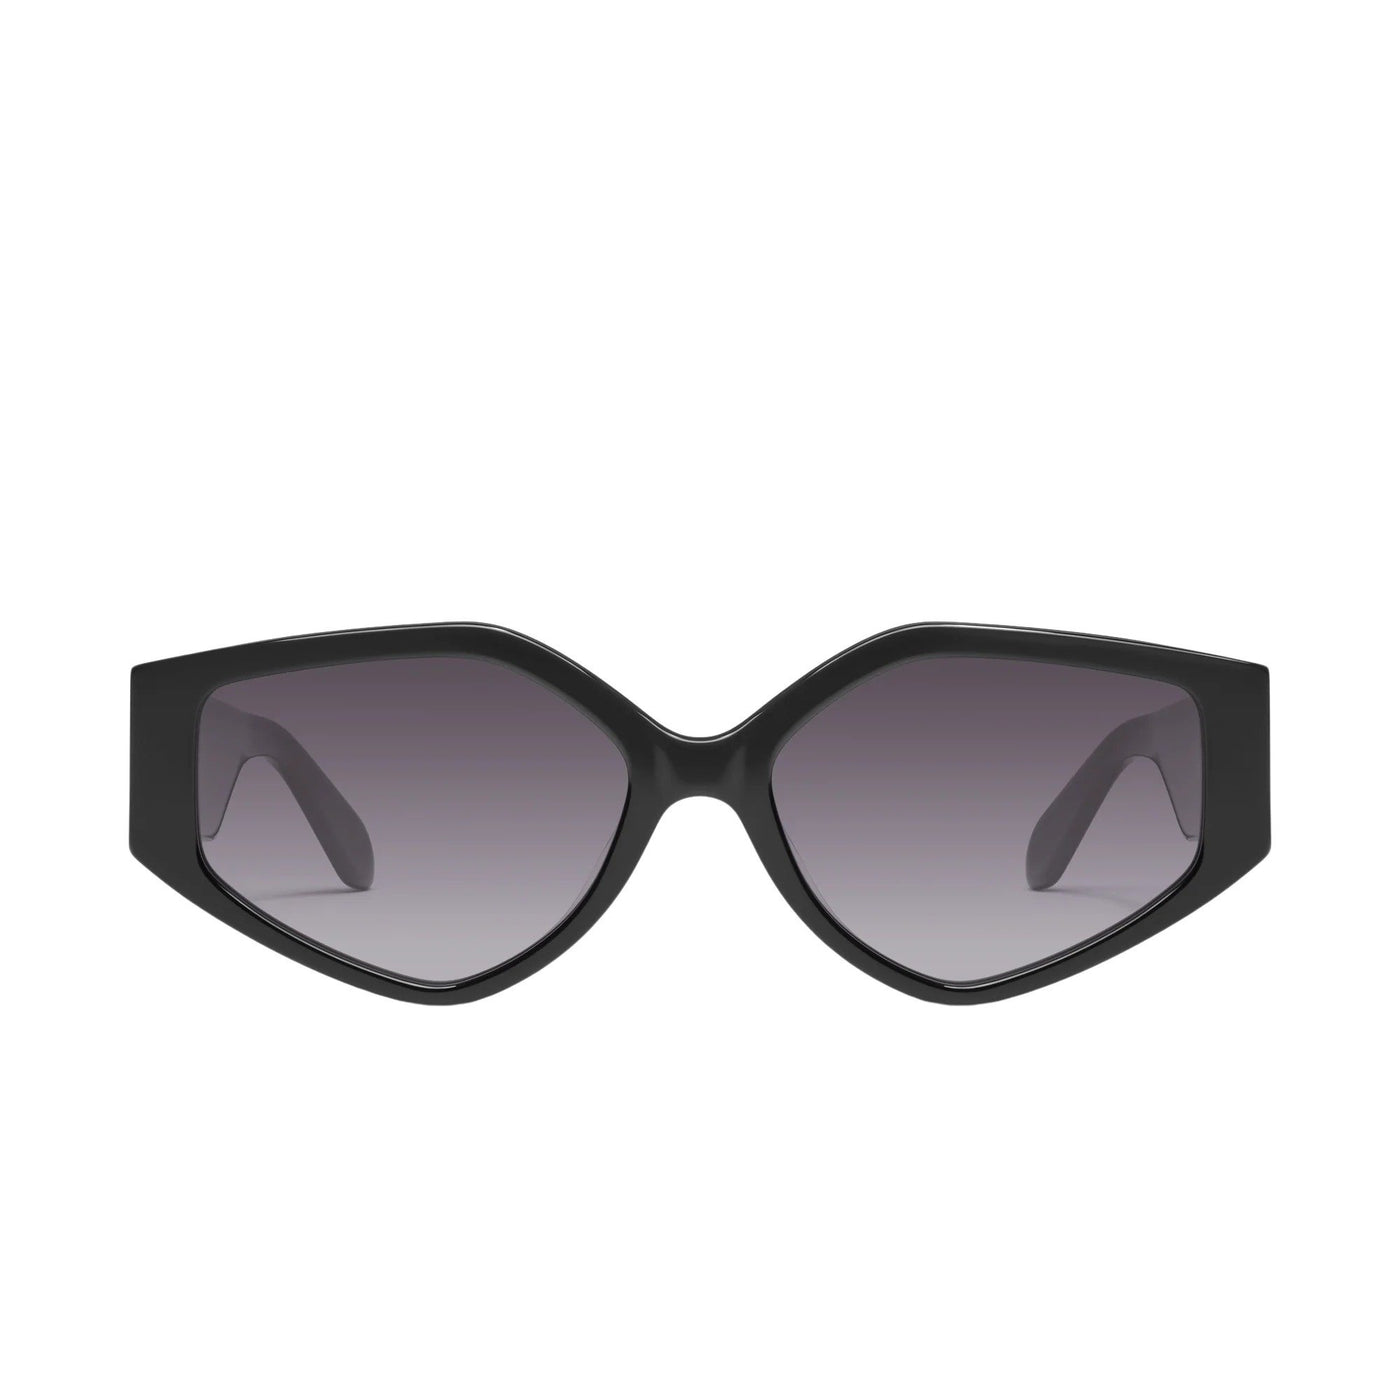 Quay Women's Hot Gossip Geometric Cat Eye Sunglasses (Black Frame/Smoke Lens) - front